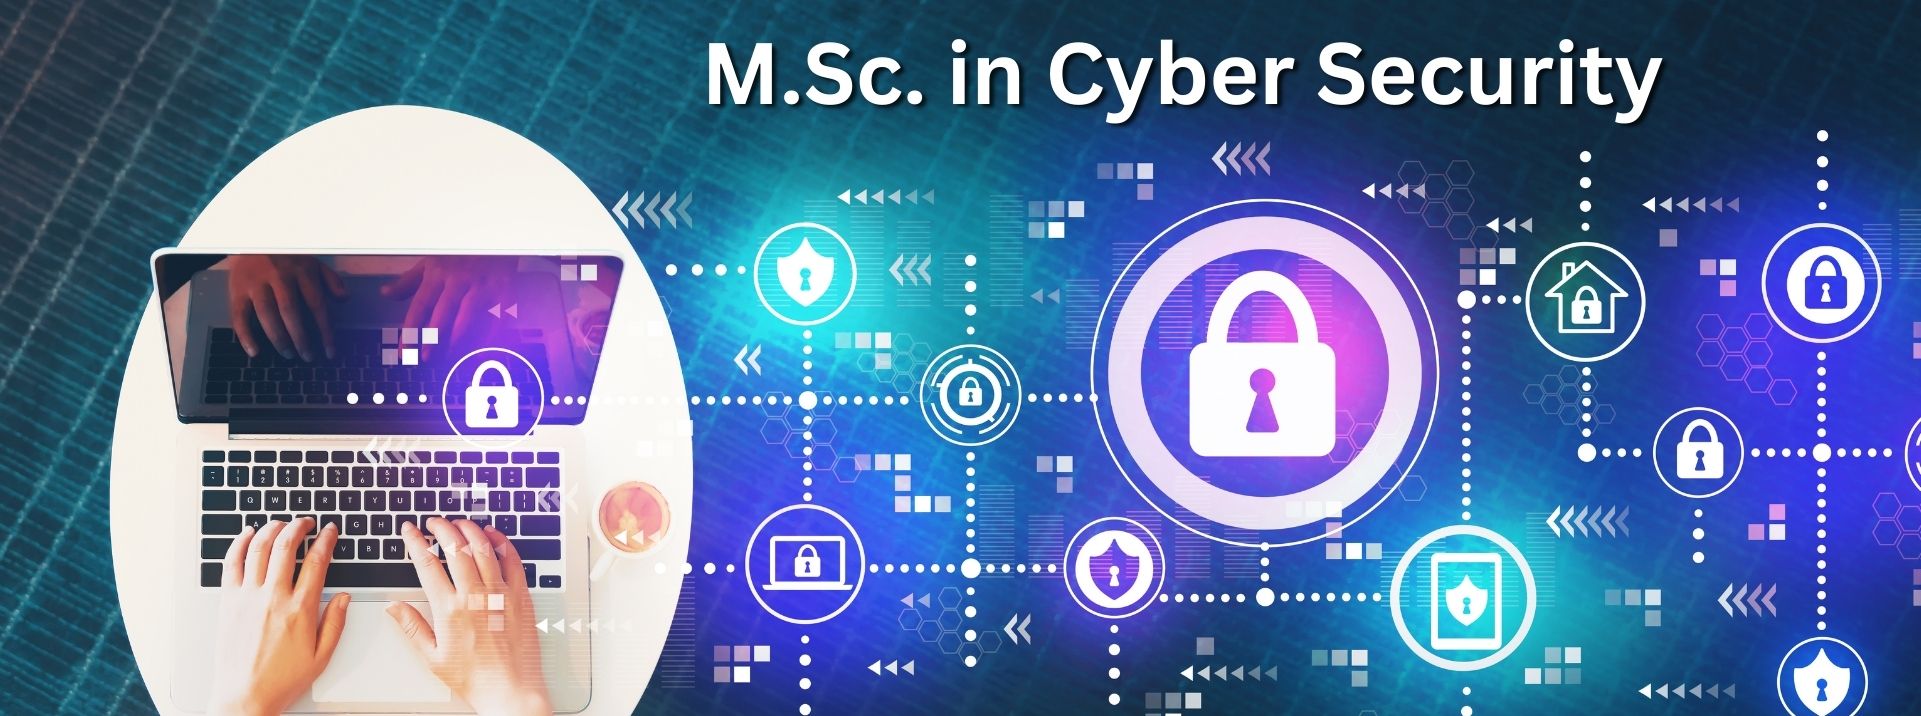 M.Sc. in Cyber Security